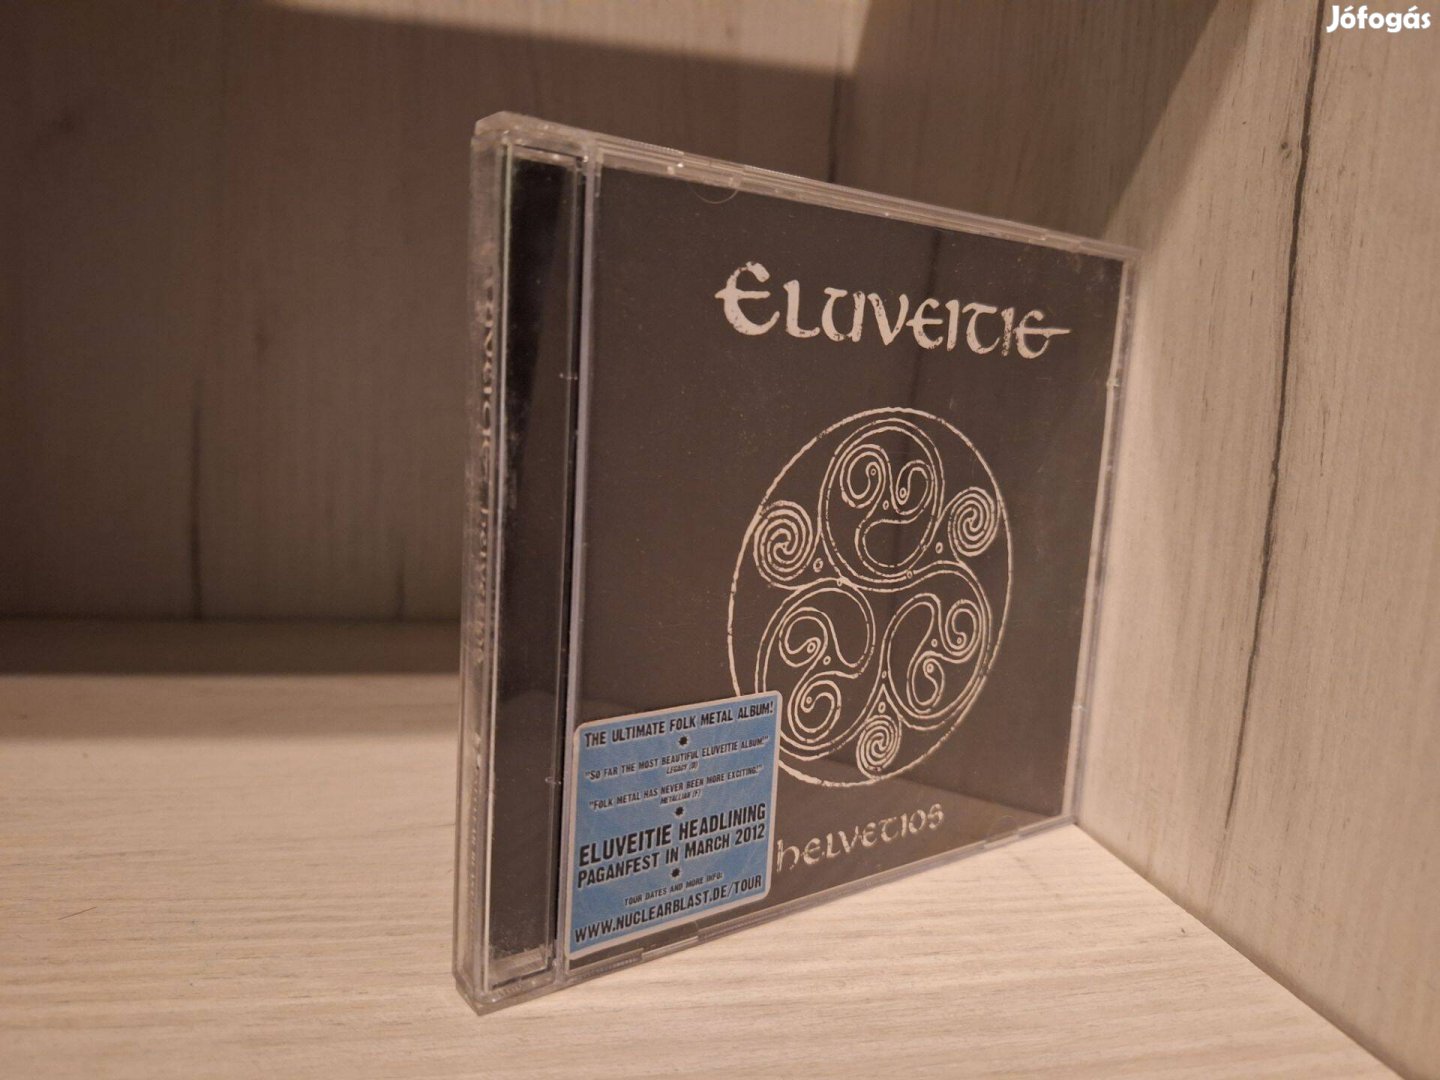 Eluveitie - Helvetios CD